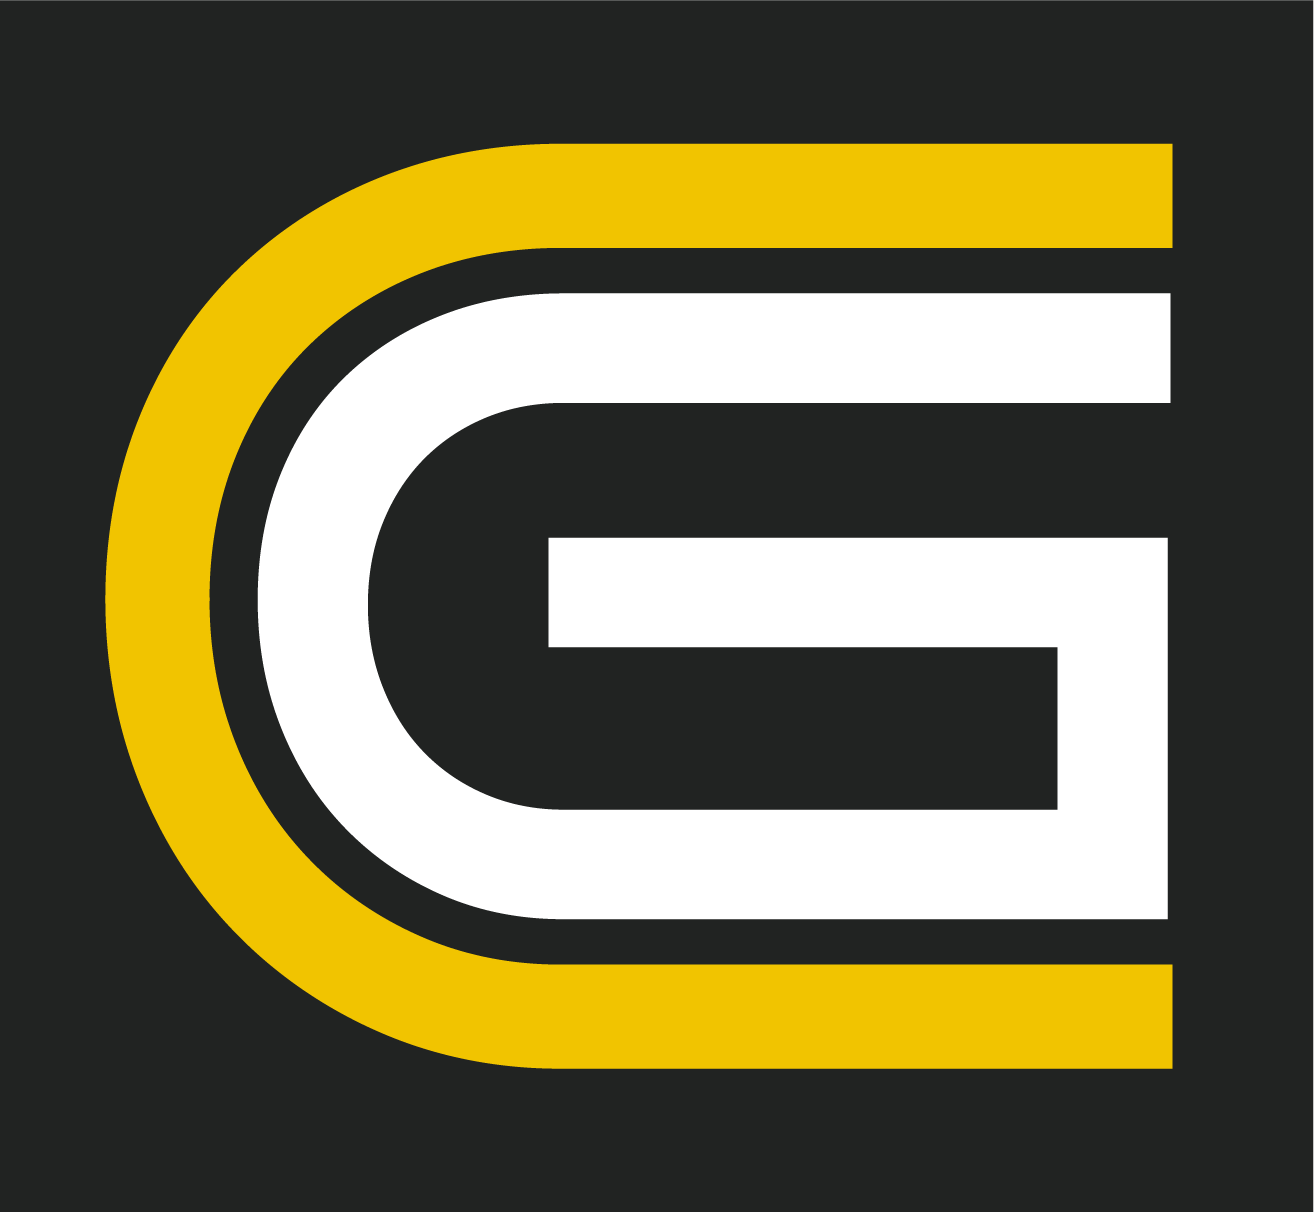 CG Professional logo.